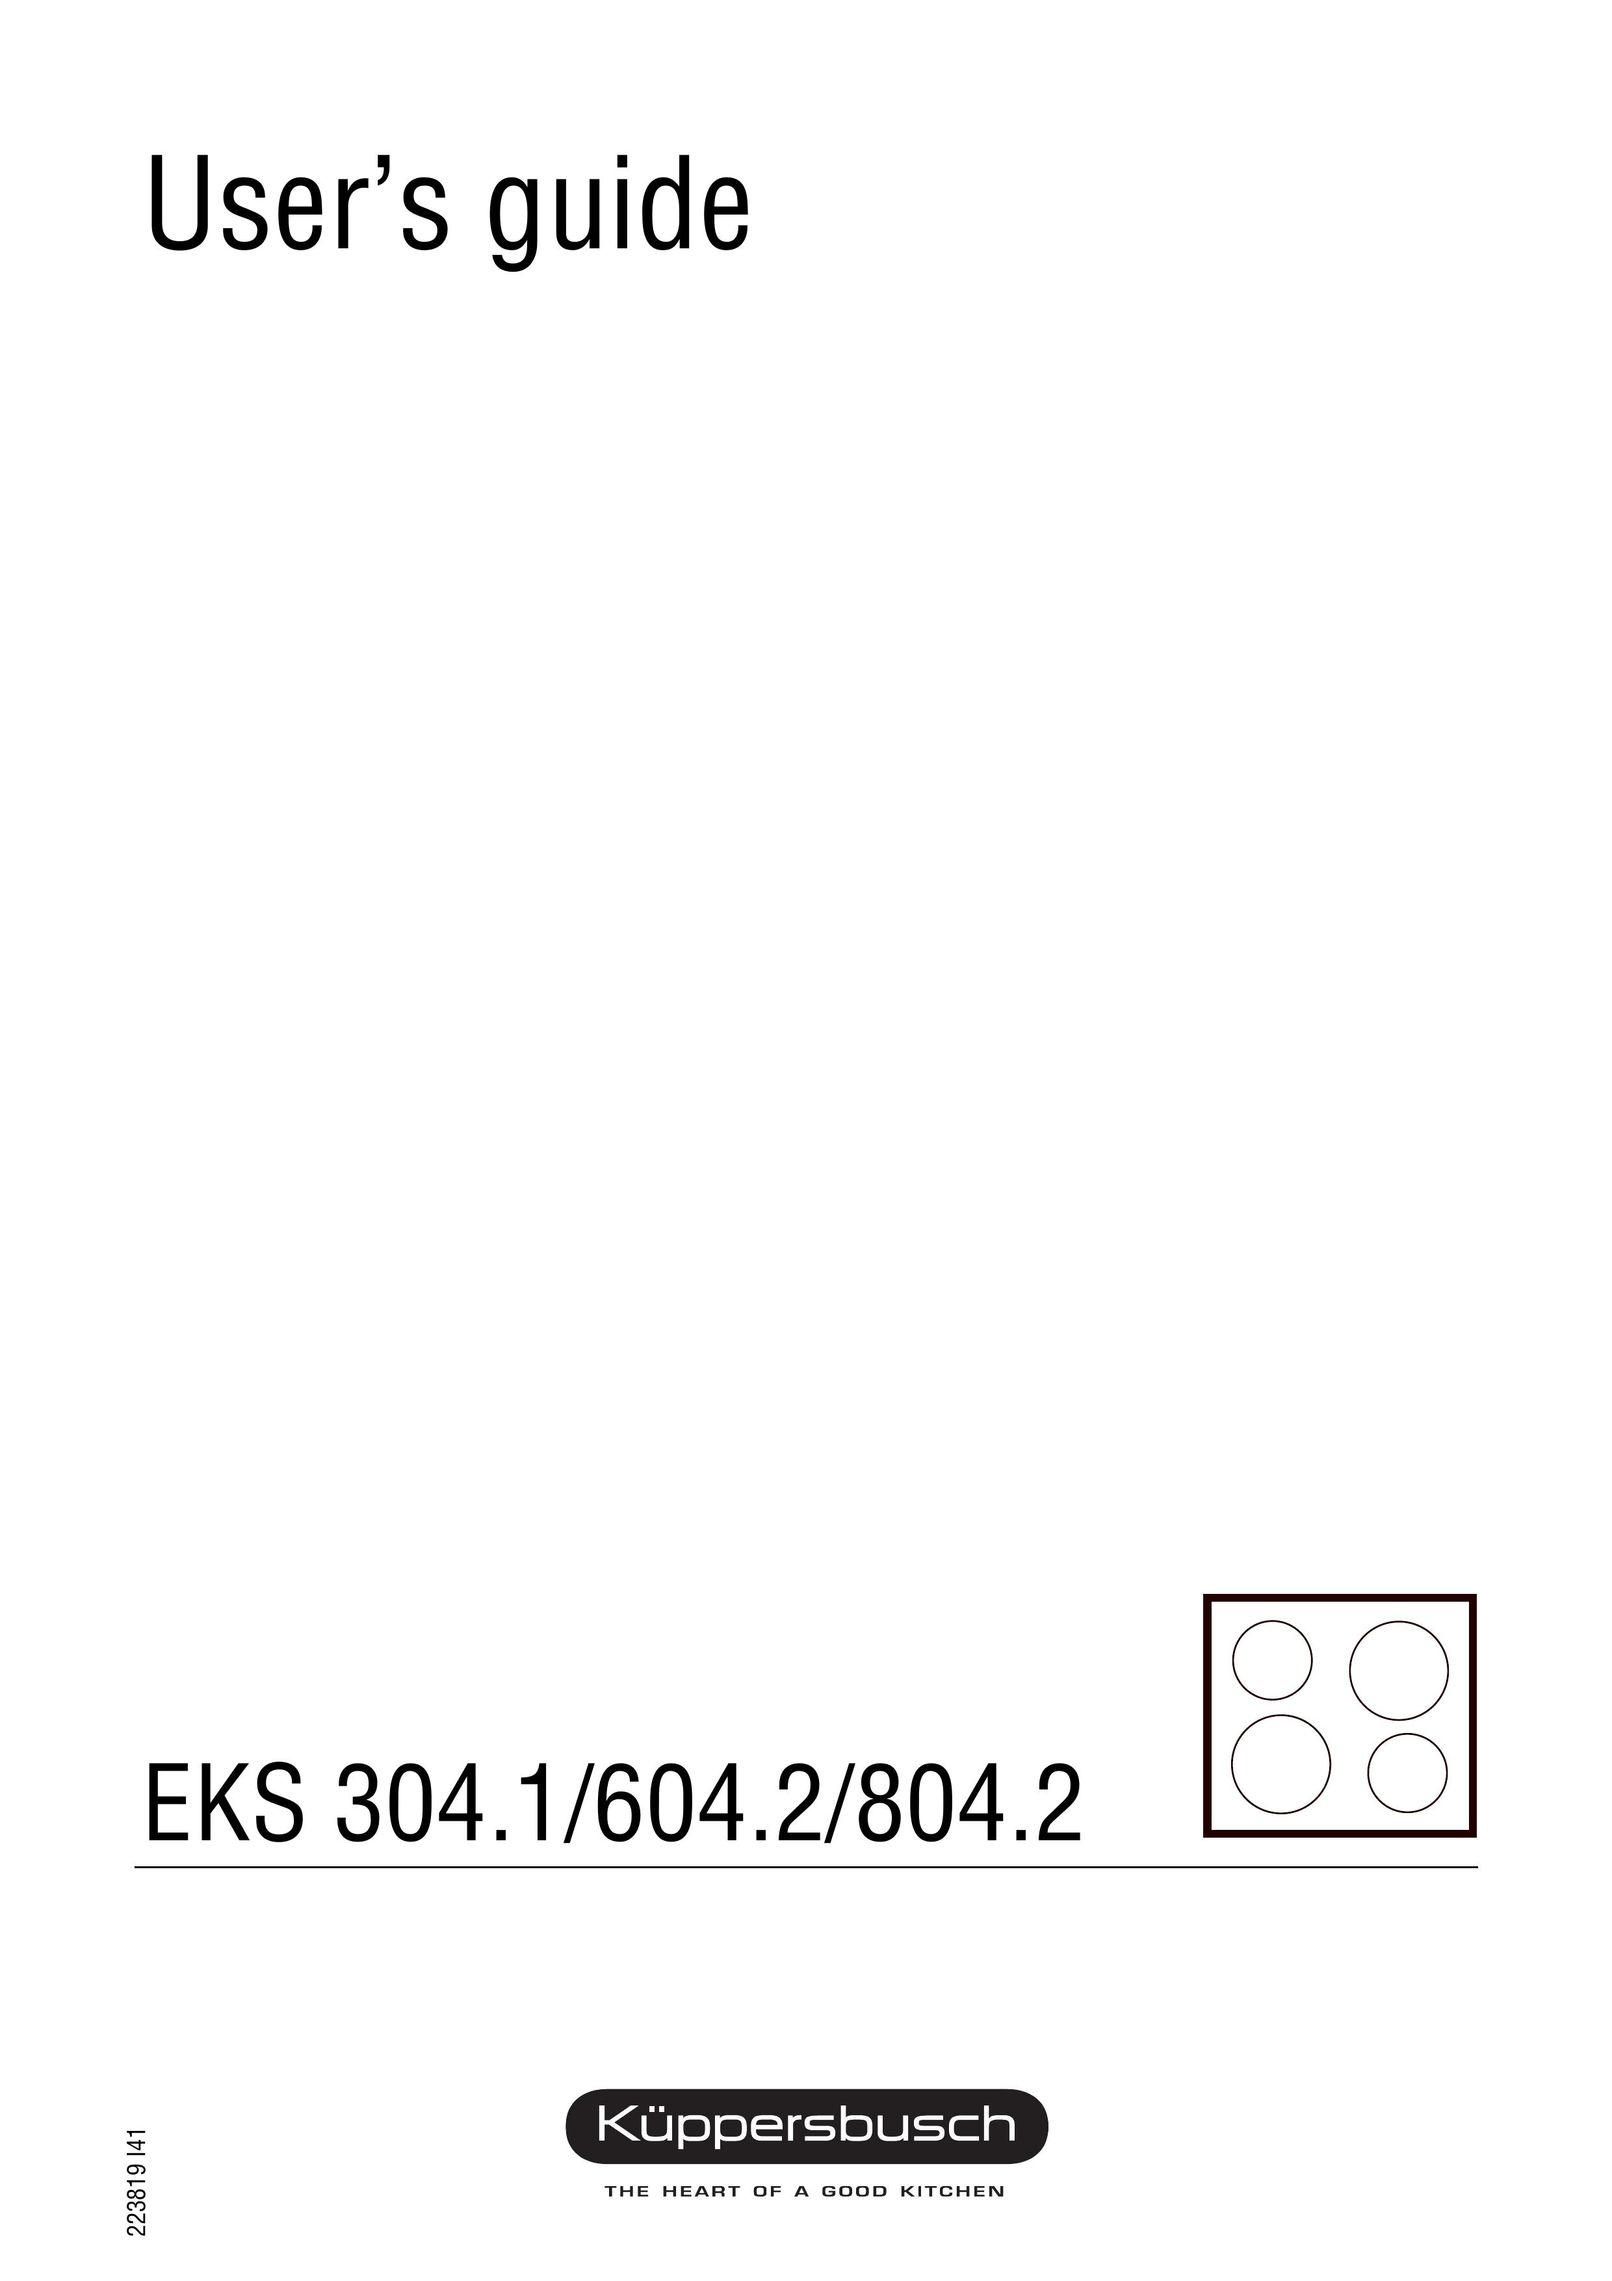 Kuppersbusch USA EKS 804.2 Oven User Manual